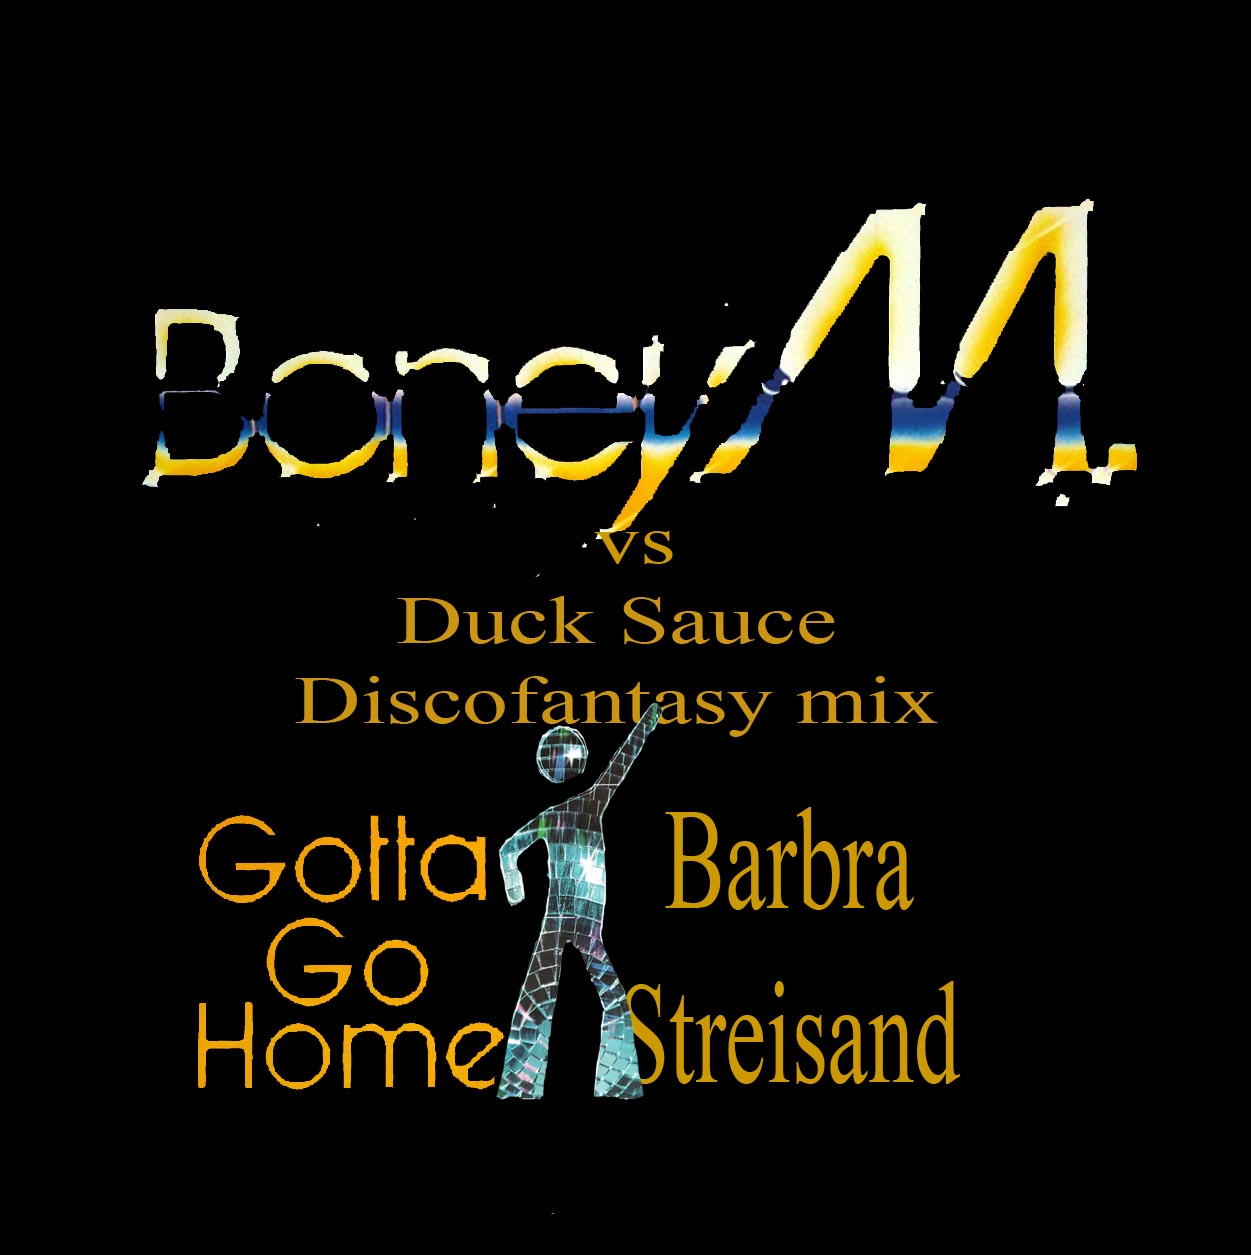 https://blogger.googleusercontent.com/img/b/R29vZ2xl/AVvXsEgOcVn0YJUaVFBI7rxLgqYLHPyhB0BKFZnni6Jspytp902AC0IBeIOC3eBFAIlEcpLGE0vOHiG6NMVssHcJ0vbqhp5SSxTwQflWvFan3r2H27jKCTCrv3TA0iHH3c9xILr18OxKzd3WDA/s1600/Boney+M.+Vs+Duck+Sauce.+Gotta+Go+Home-Barbra+Streisand+.jpg